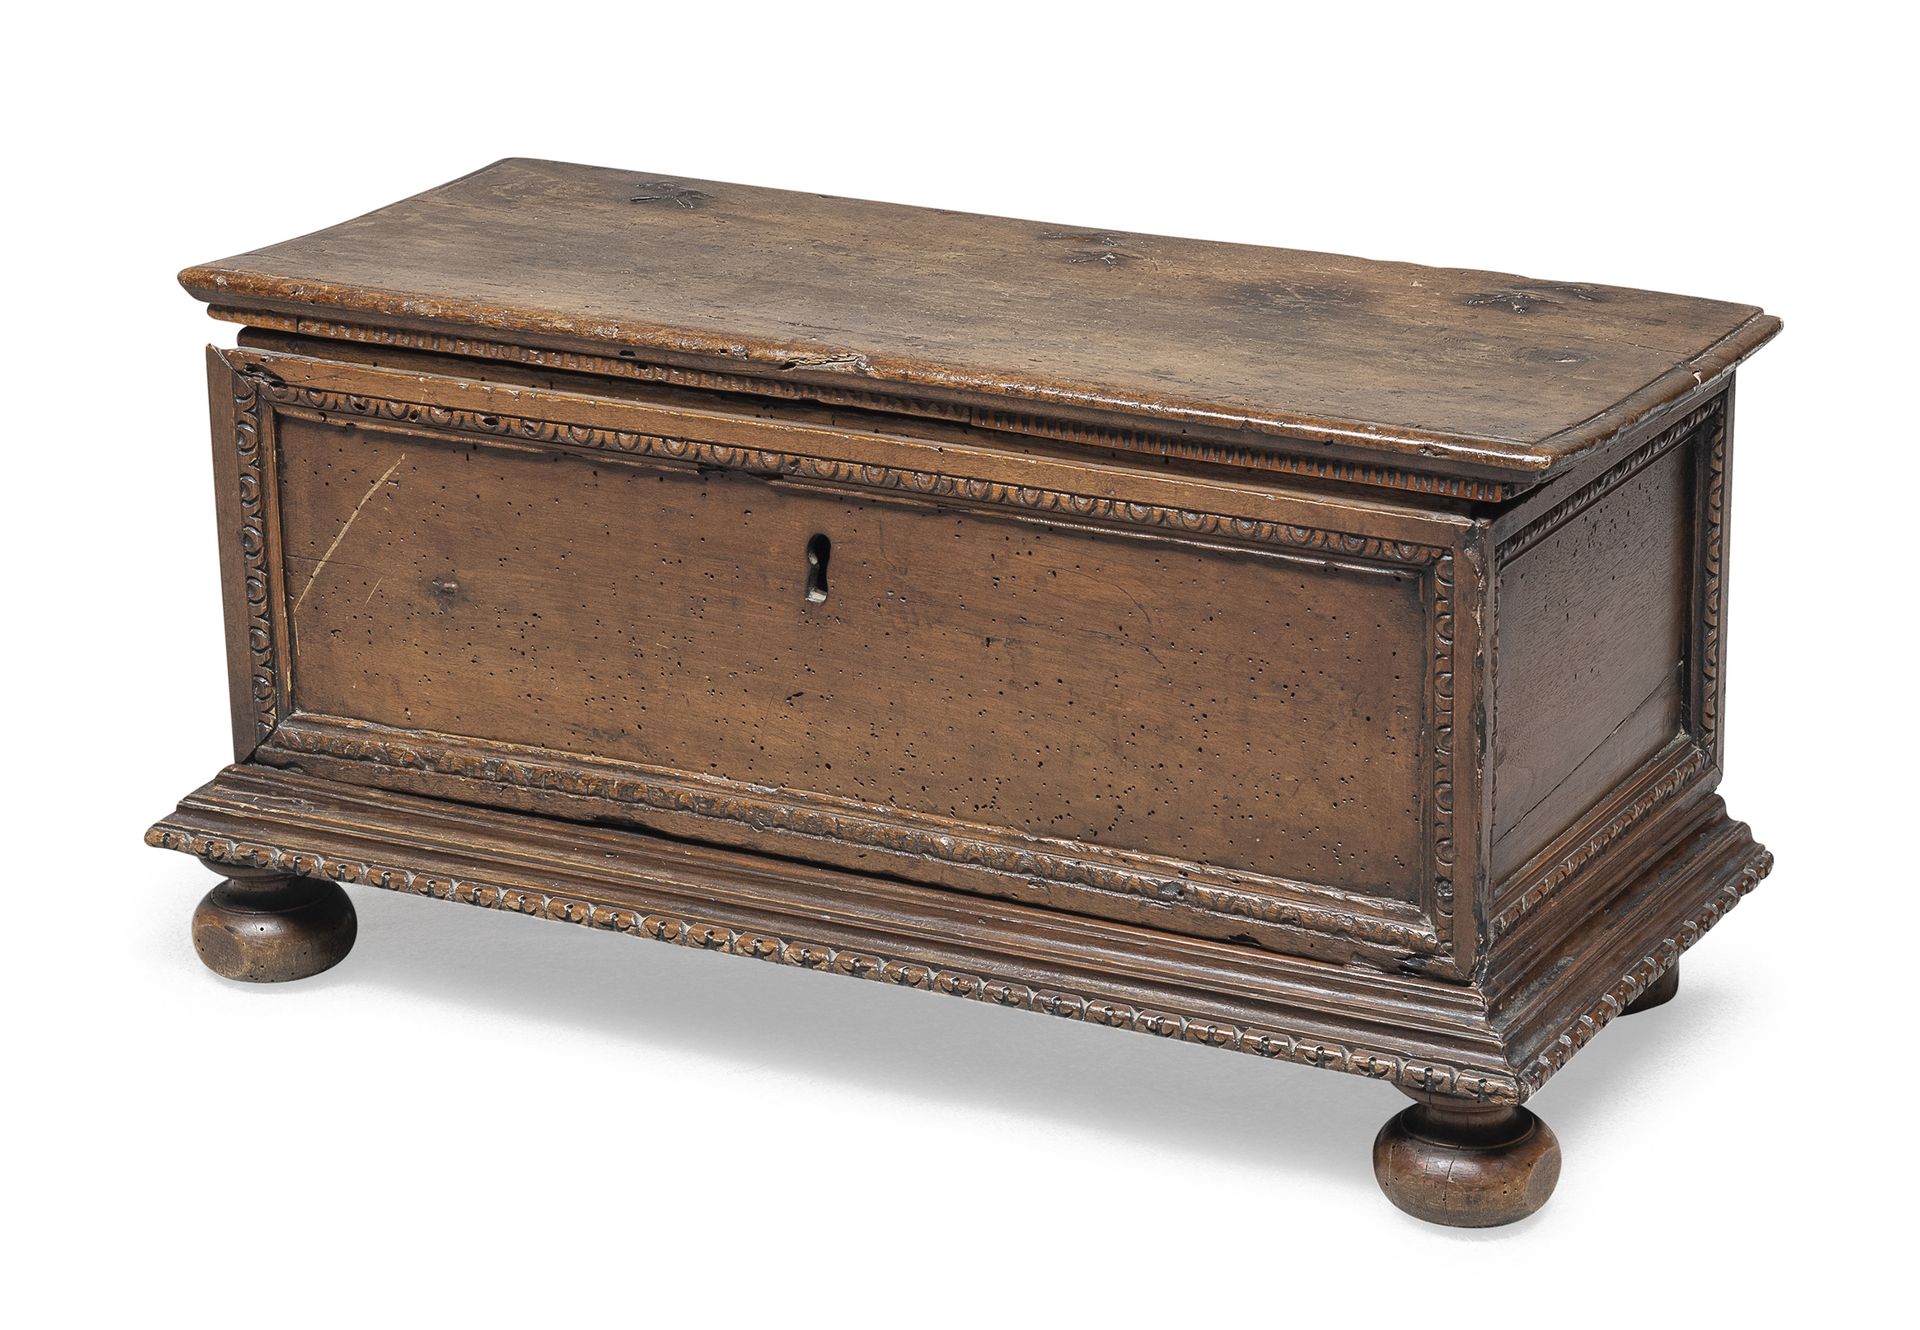 Null 胡桃木木箱，可能来自艾米利亚，18世纪初

长方形的箱子，正面和侧面都是普通的。阶梯式底座带，洋葱脚。

尺寸为39 x 78 x 32厘米。

一侧&hellip;